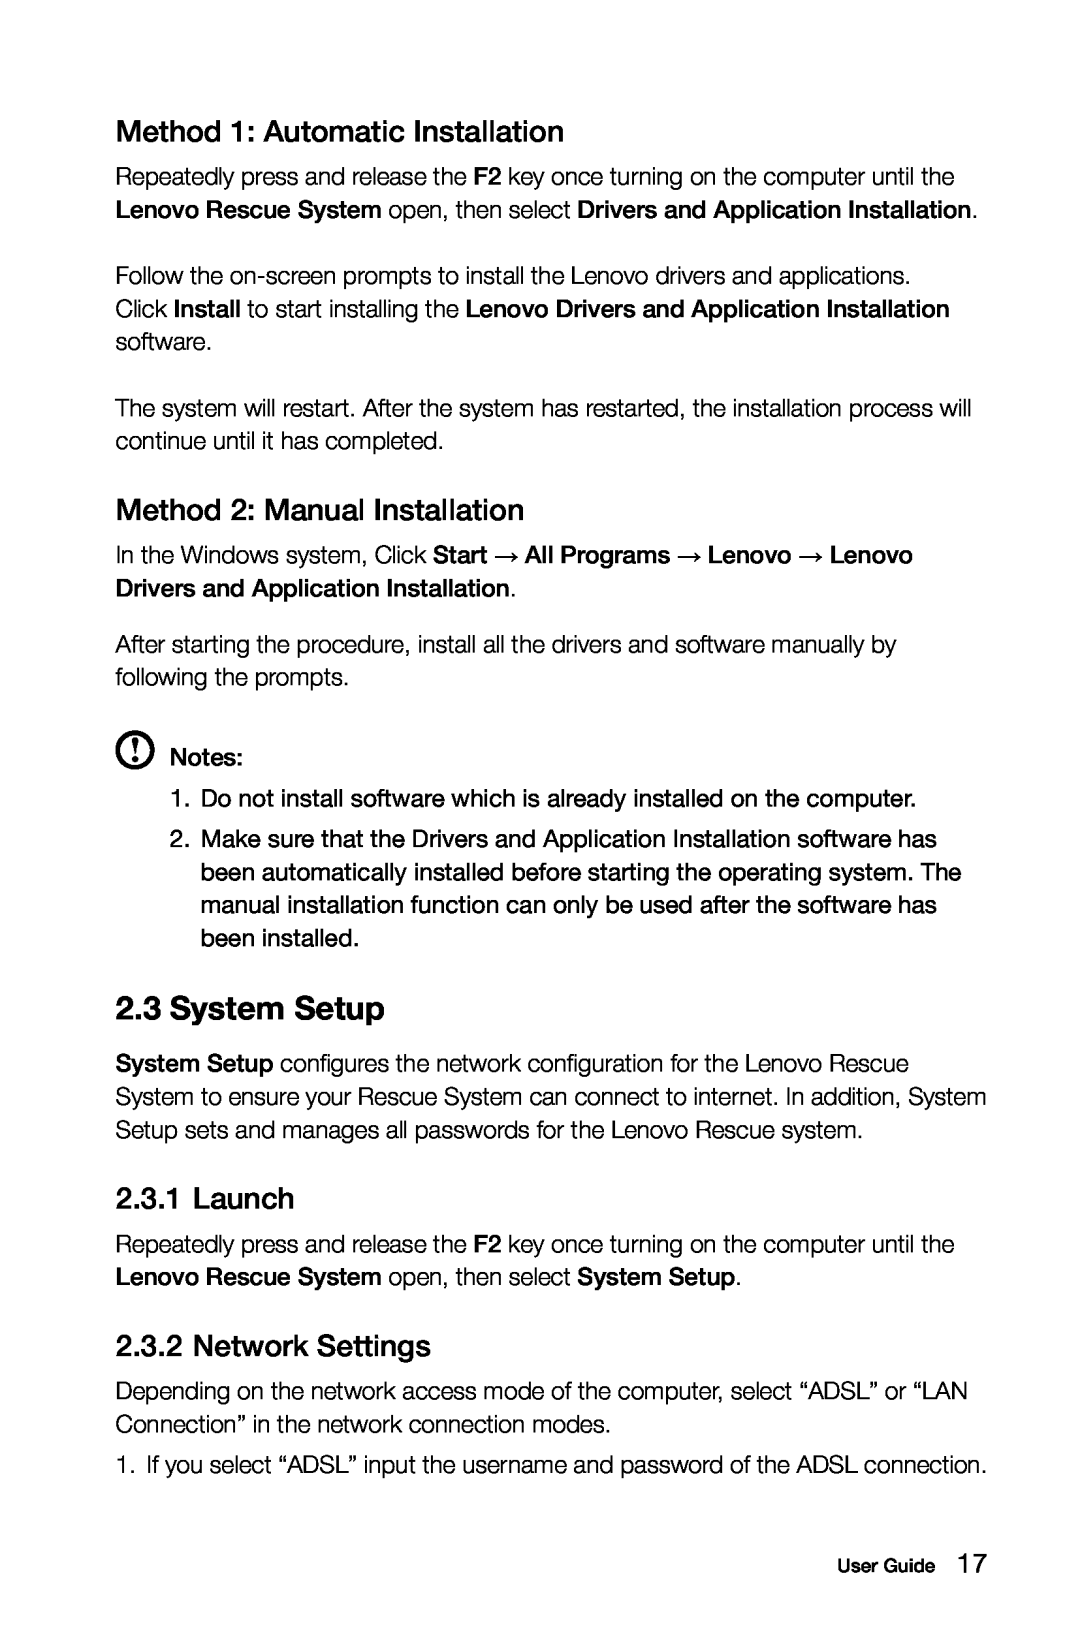 Lenovo 10091/2558/1196 manual System Setup, Method 1 Automatic Installation, Method 2 Manual Installation, Launch 